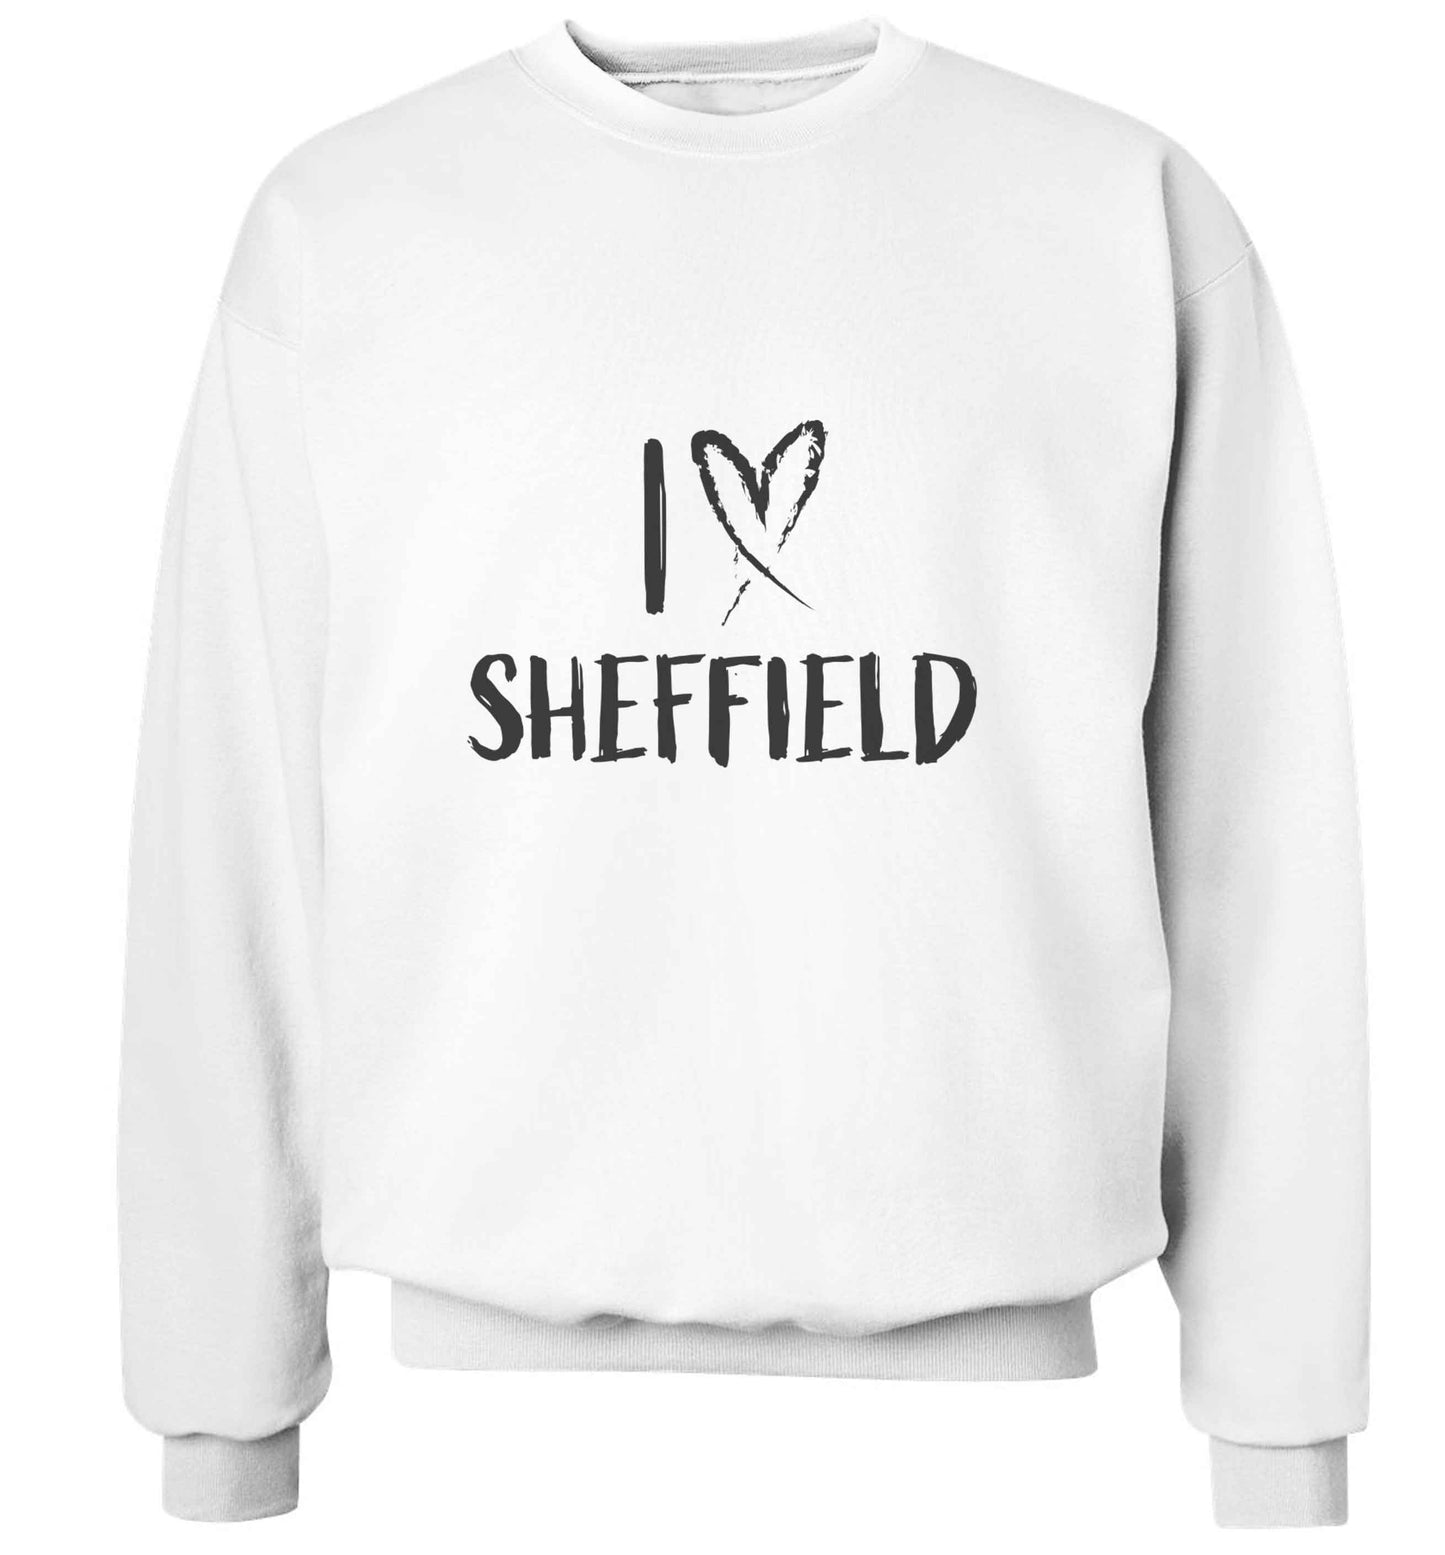 I love Sheffield adult's unisex white sweater 2XL